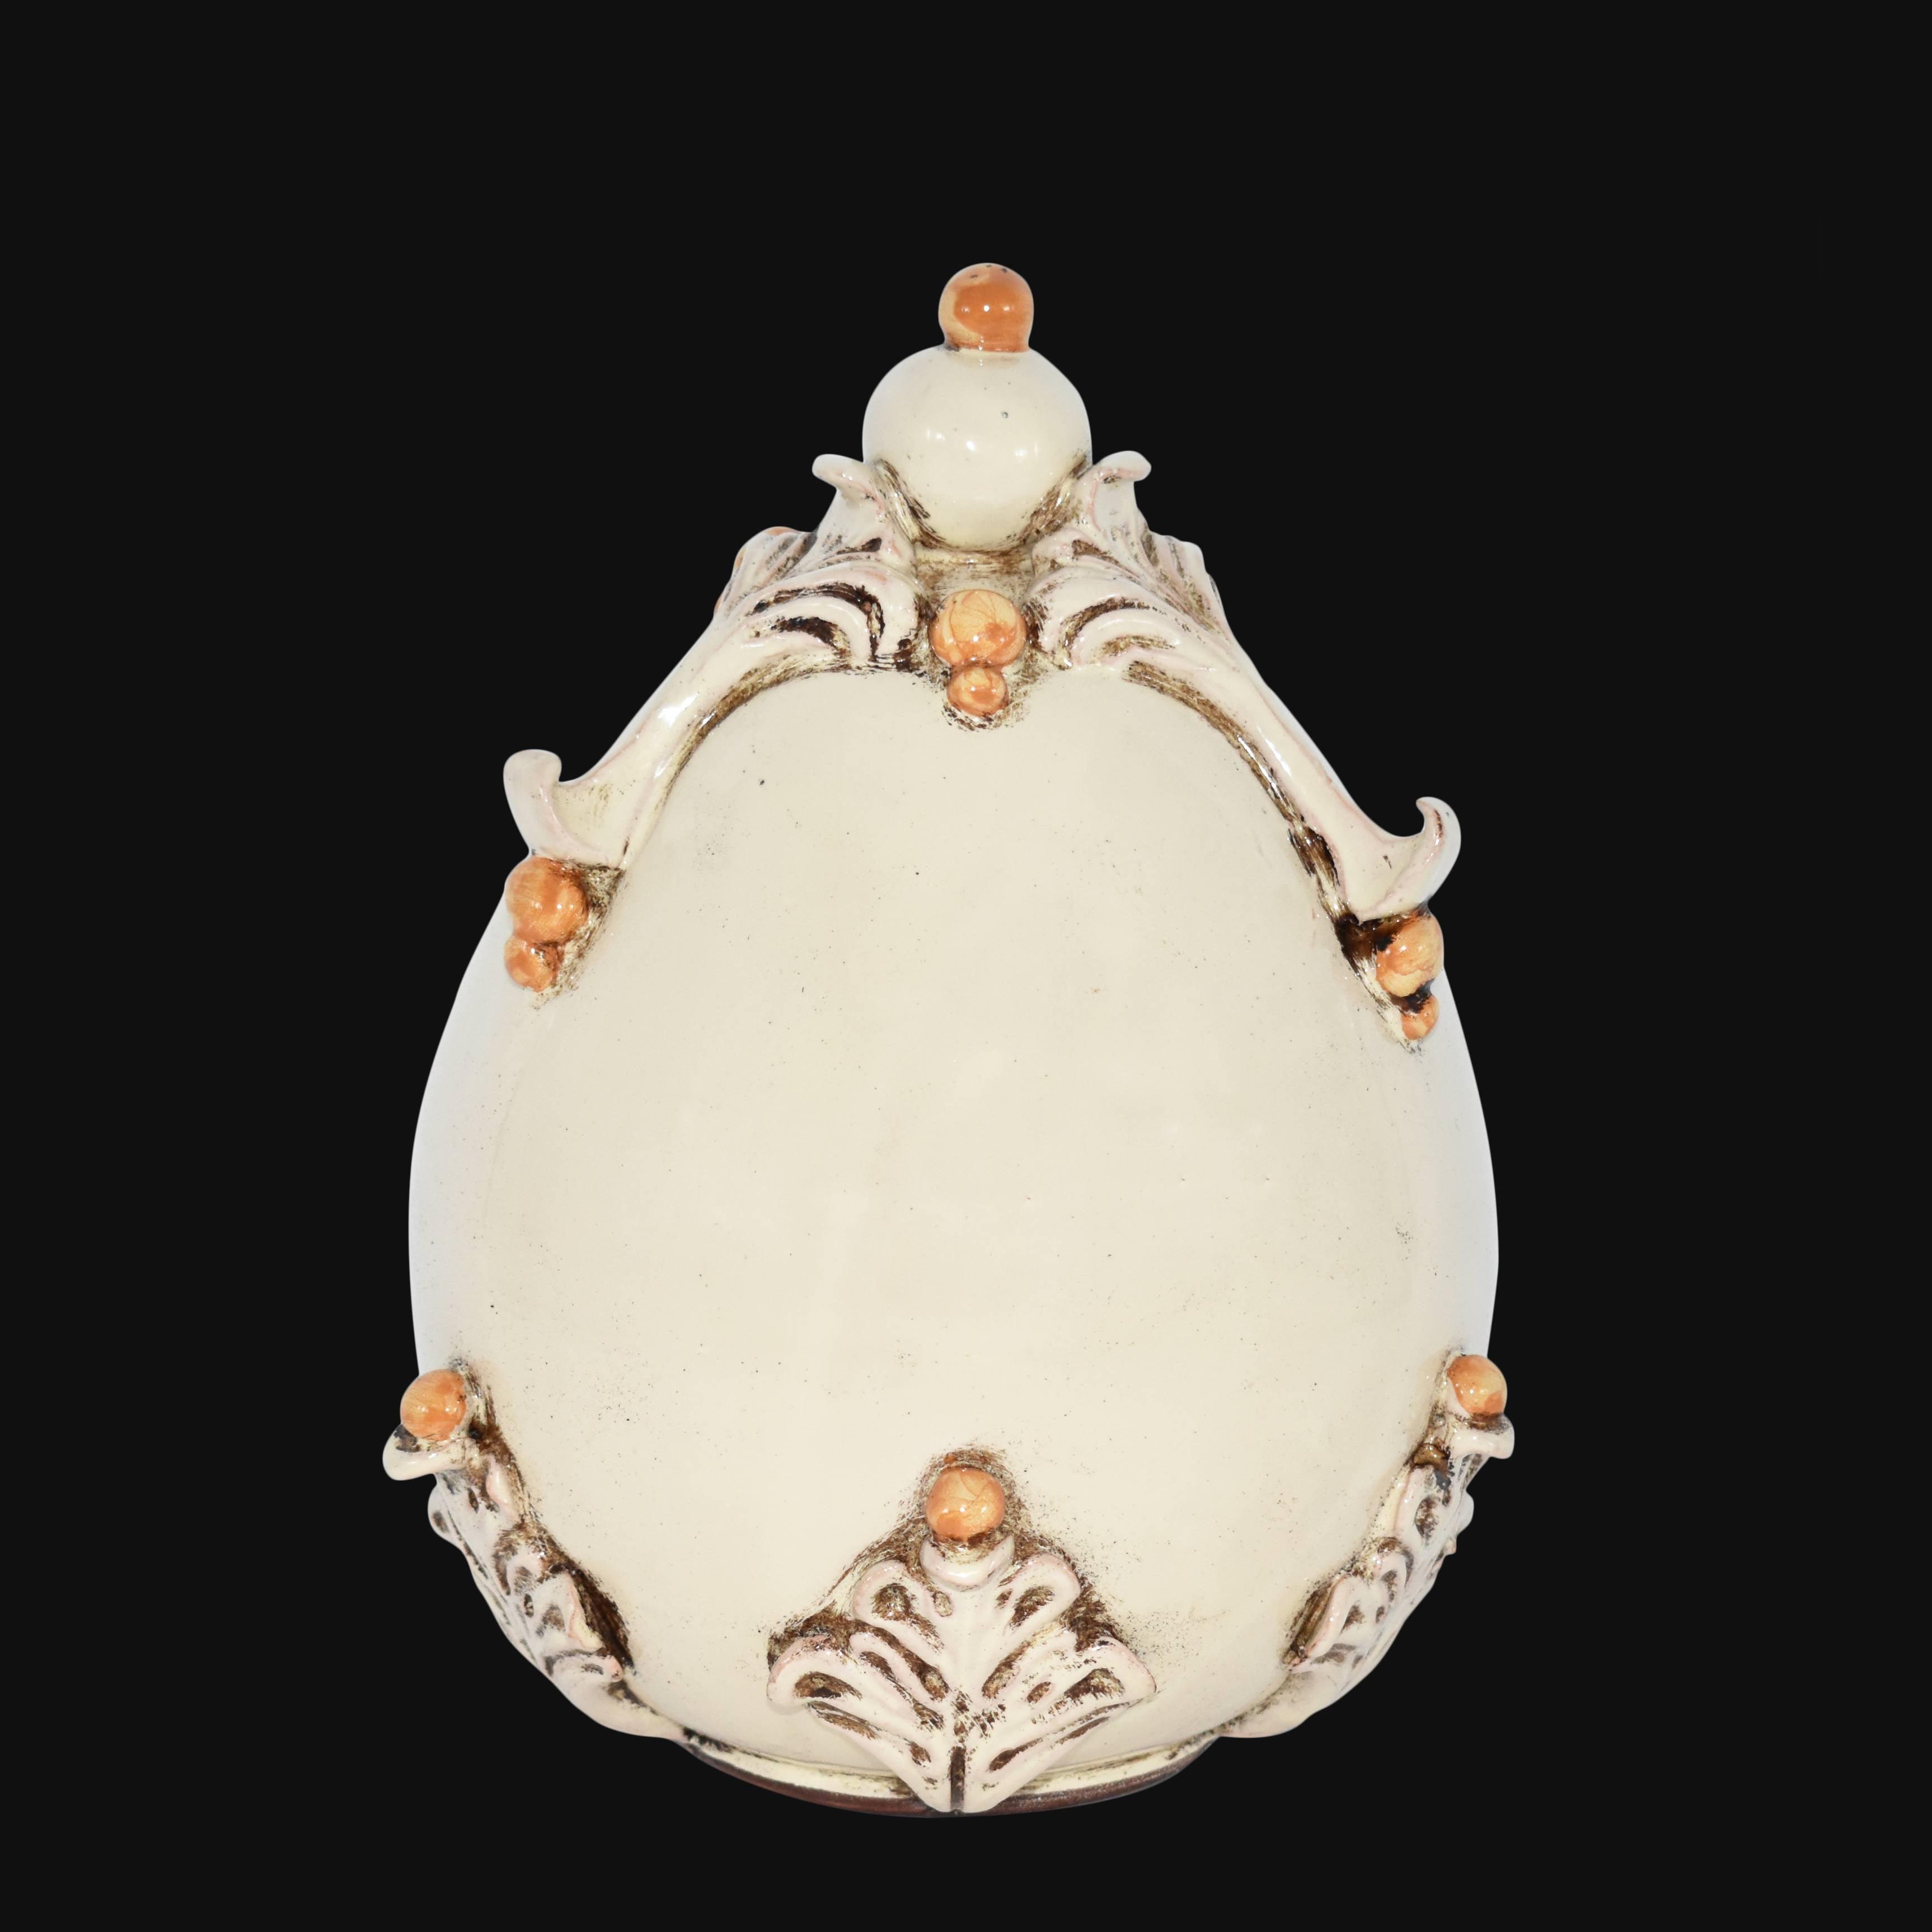 Uovo in ceramica h 22 plastico Sofia Avorio e Giallo - Ceramiche di Caltagirone - Ceramiche di Caltagirone Sofia